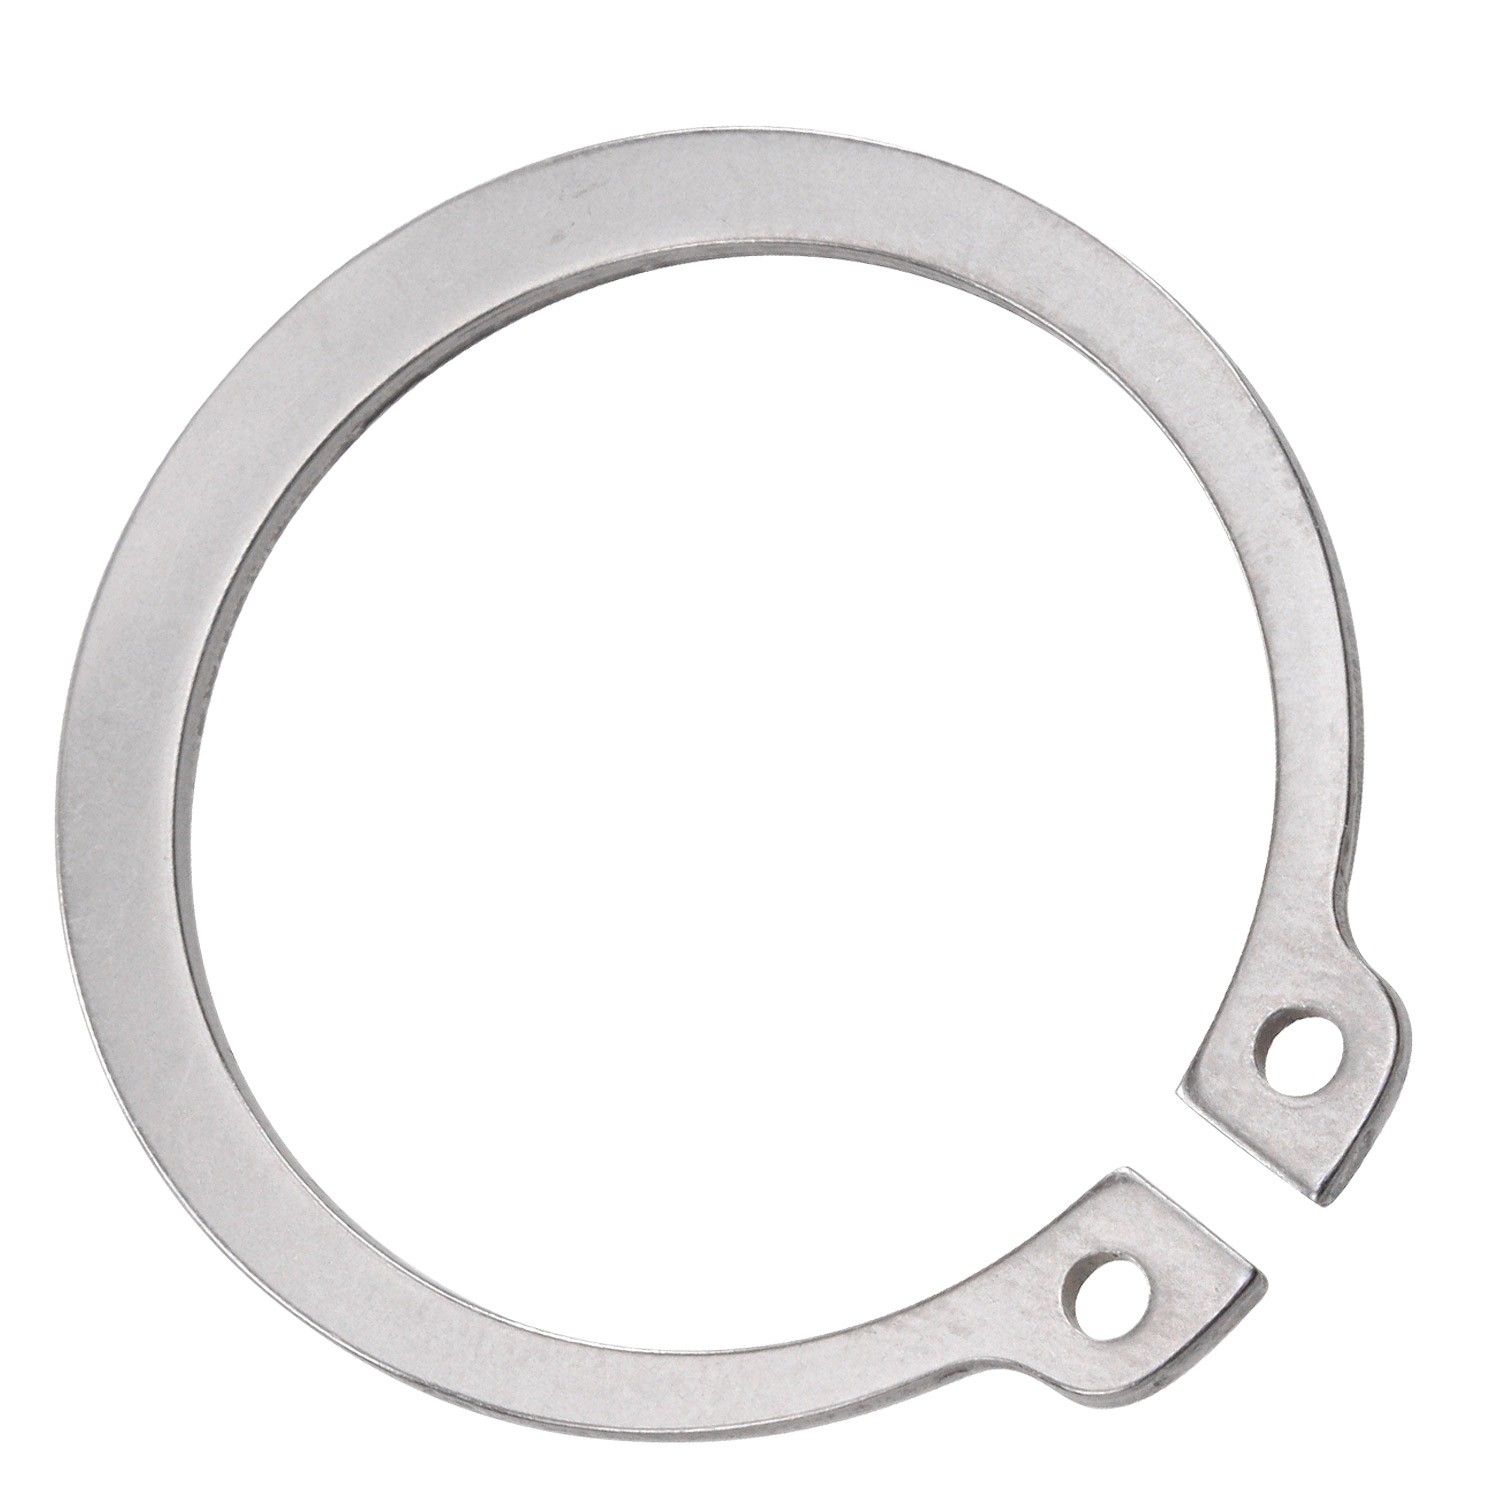 Кольцо стопорное наружное 24х1,2 DIN 471, нержавеющая сталь 1.4122 (А2) - фото